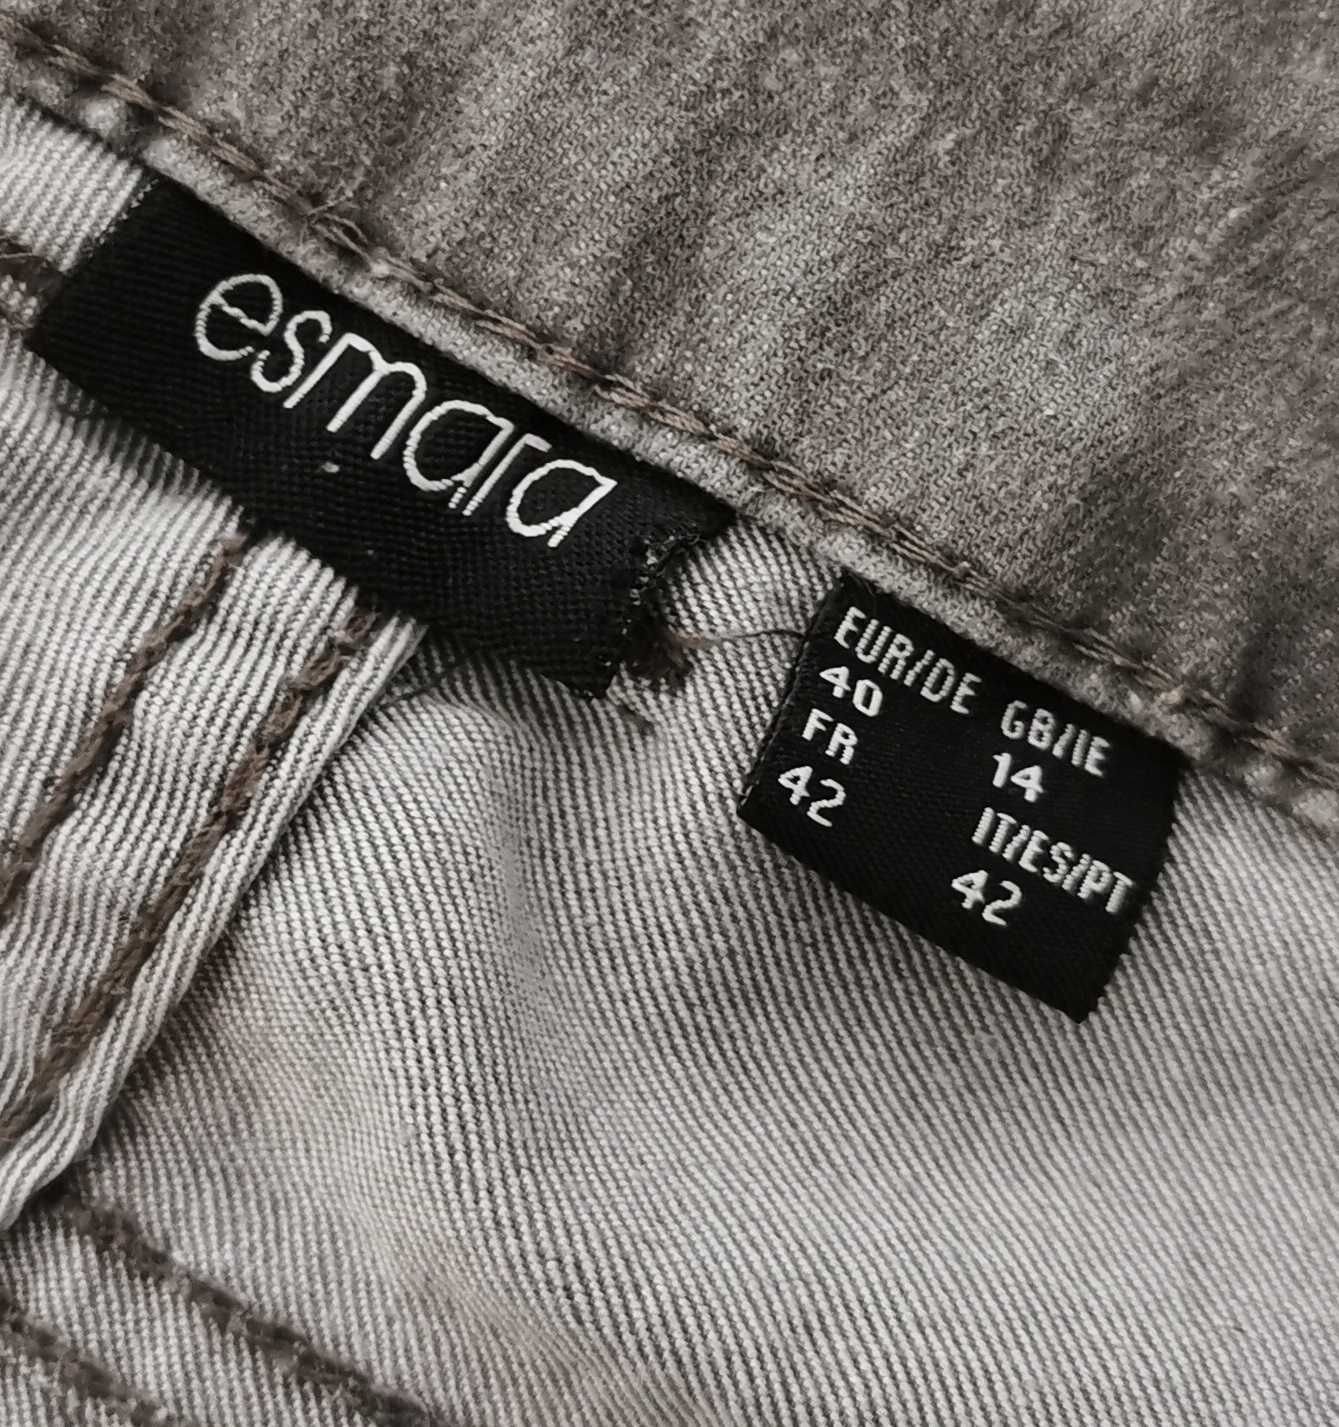 Spodnie jeansy esmara damskie rozmiar 40 L/XL